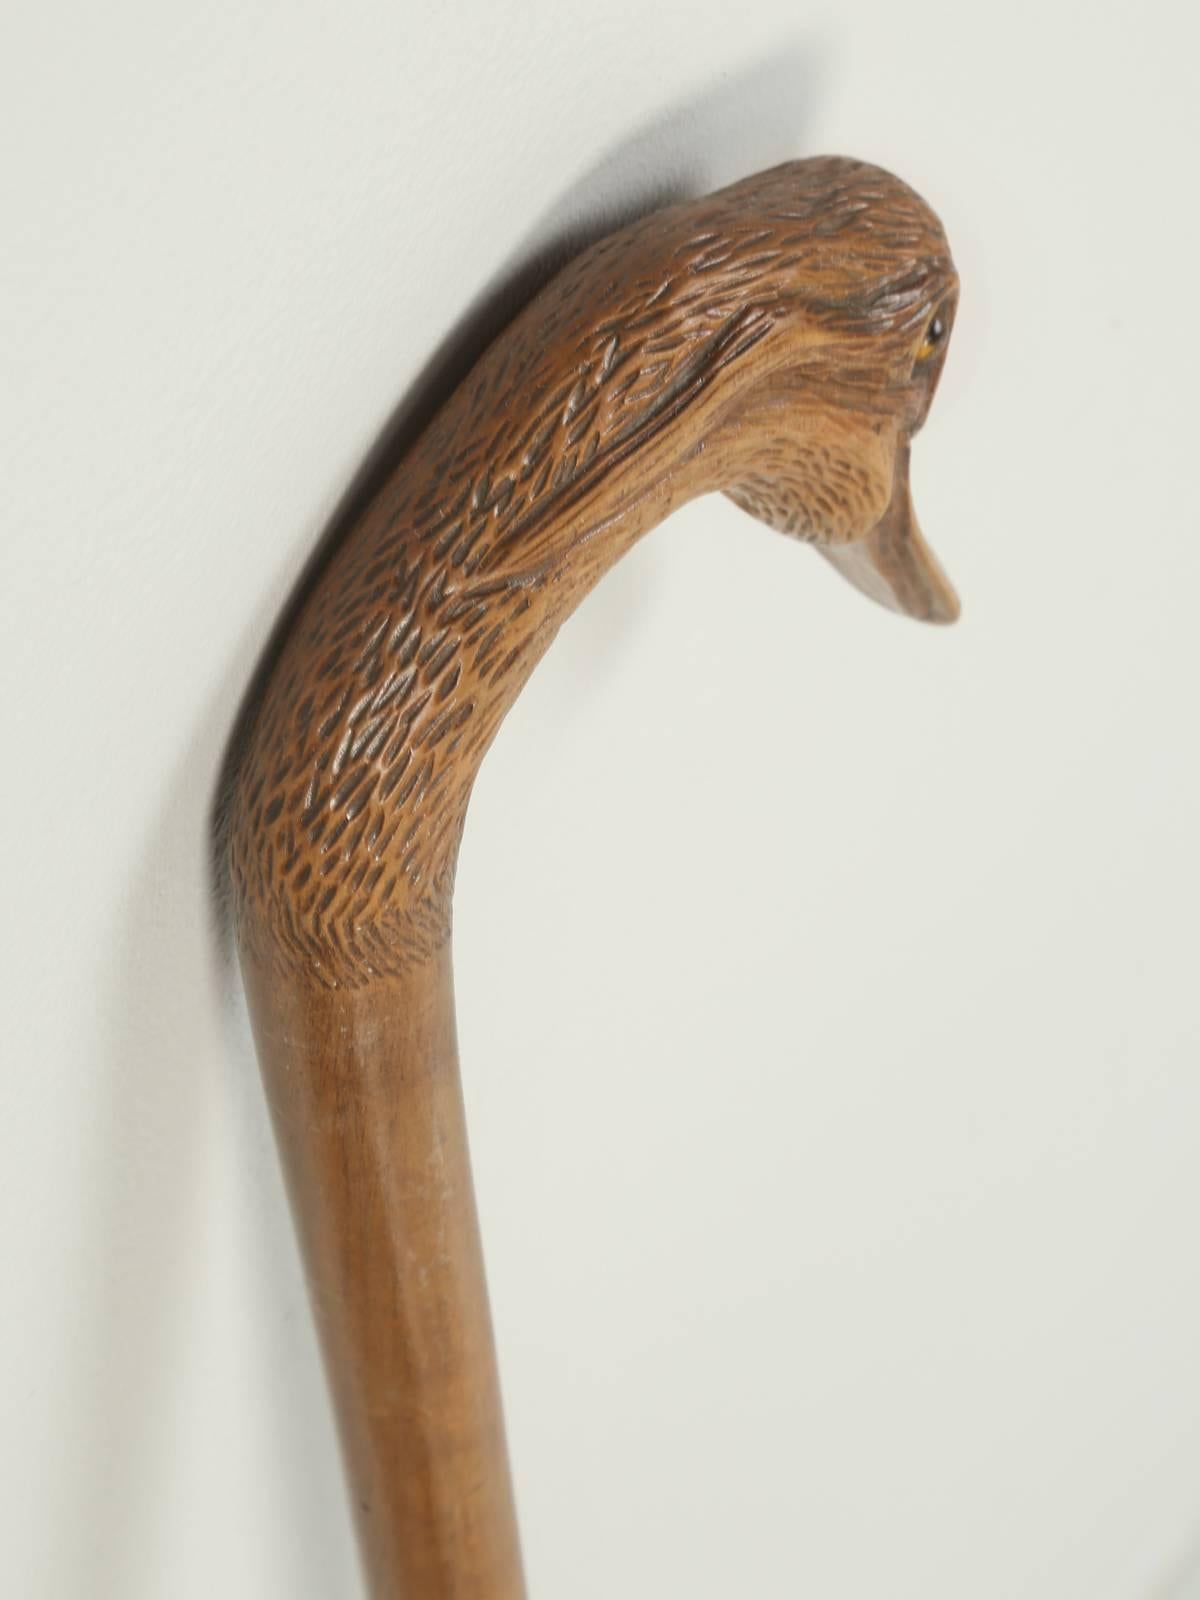 Folk Art Vintage French Walking Stick or Cane in a Duck Motif